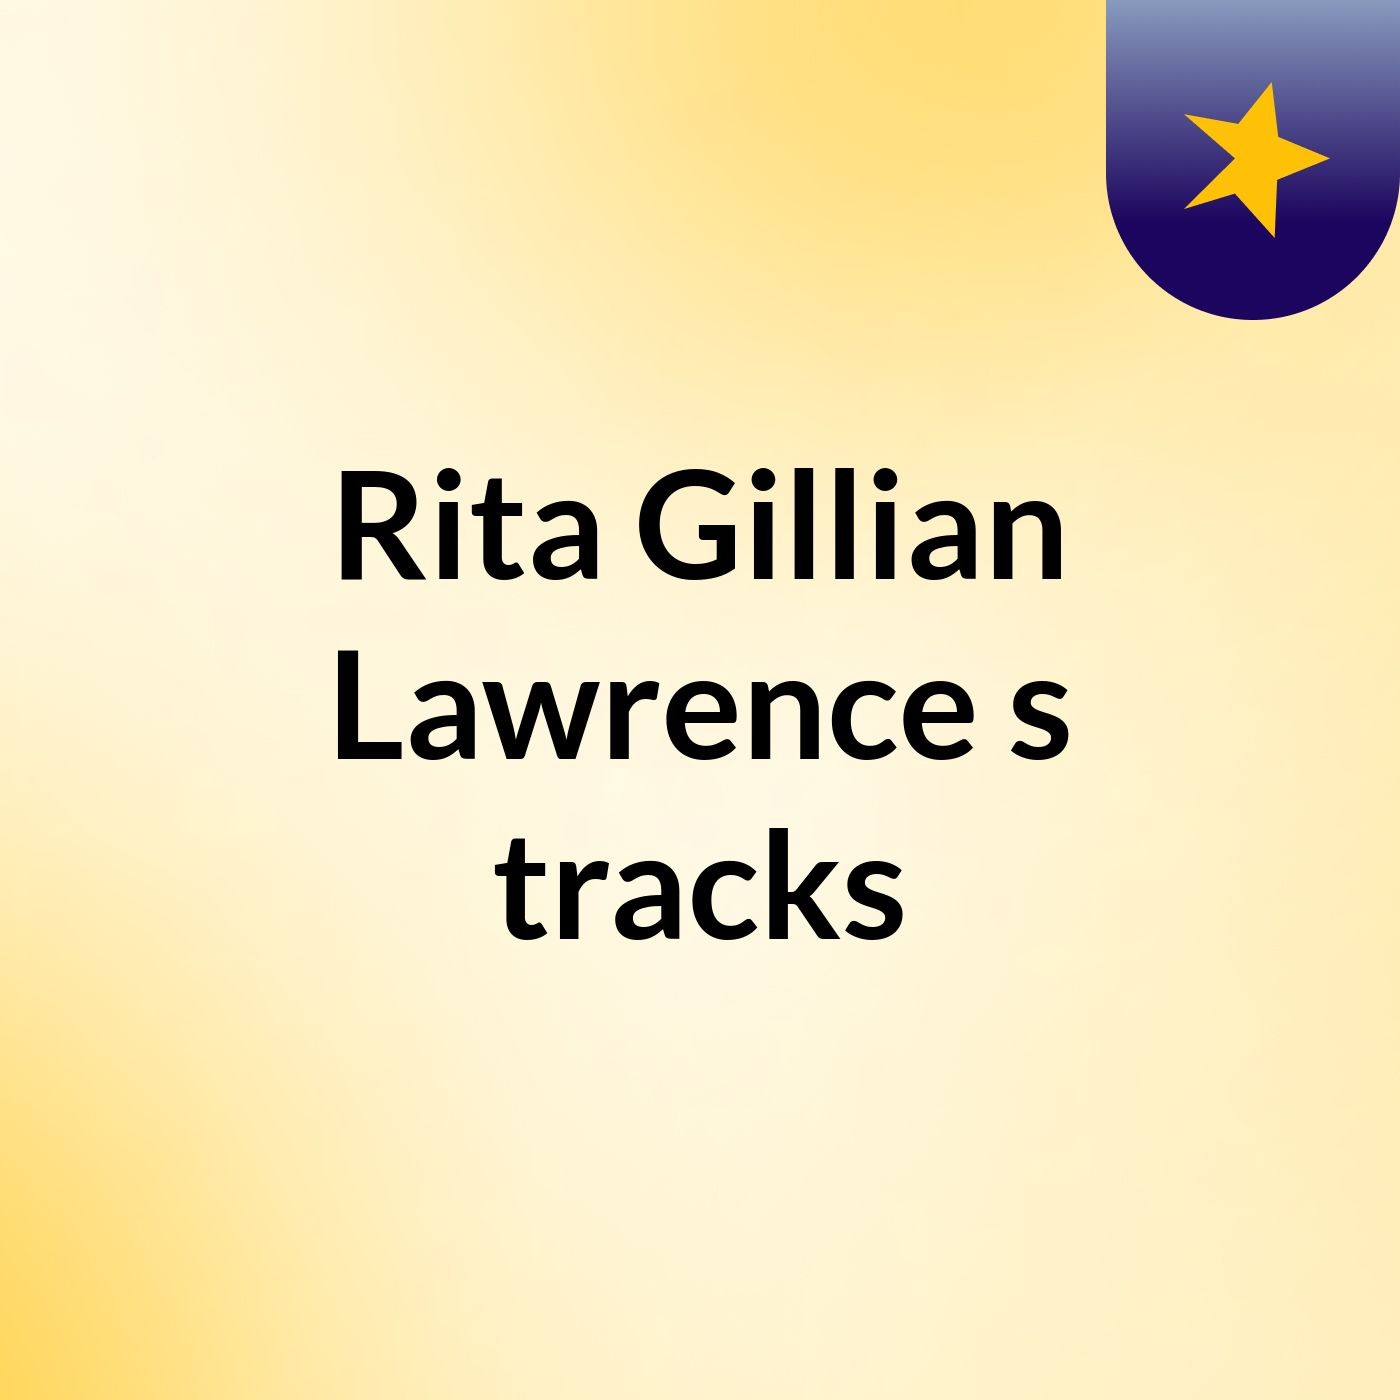 Rita Gillian Lawrence's tracks